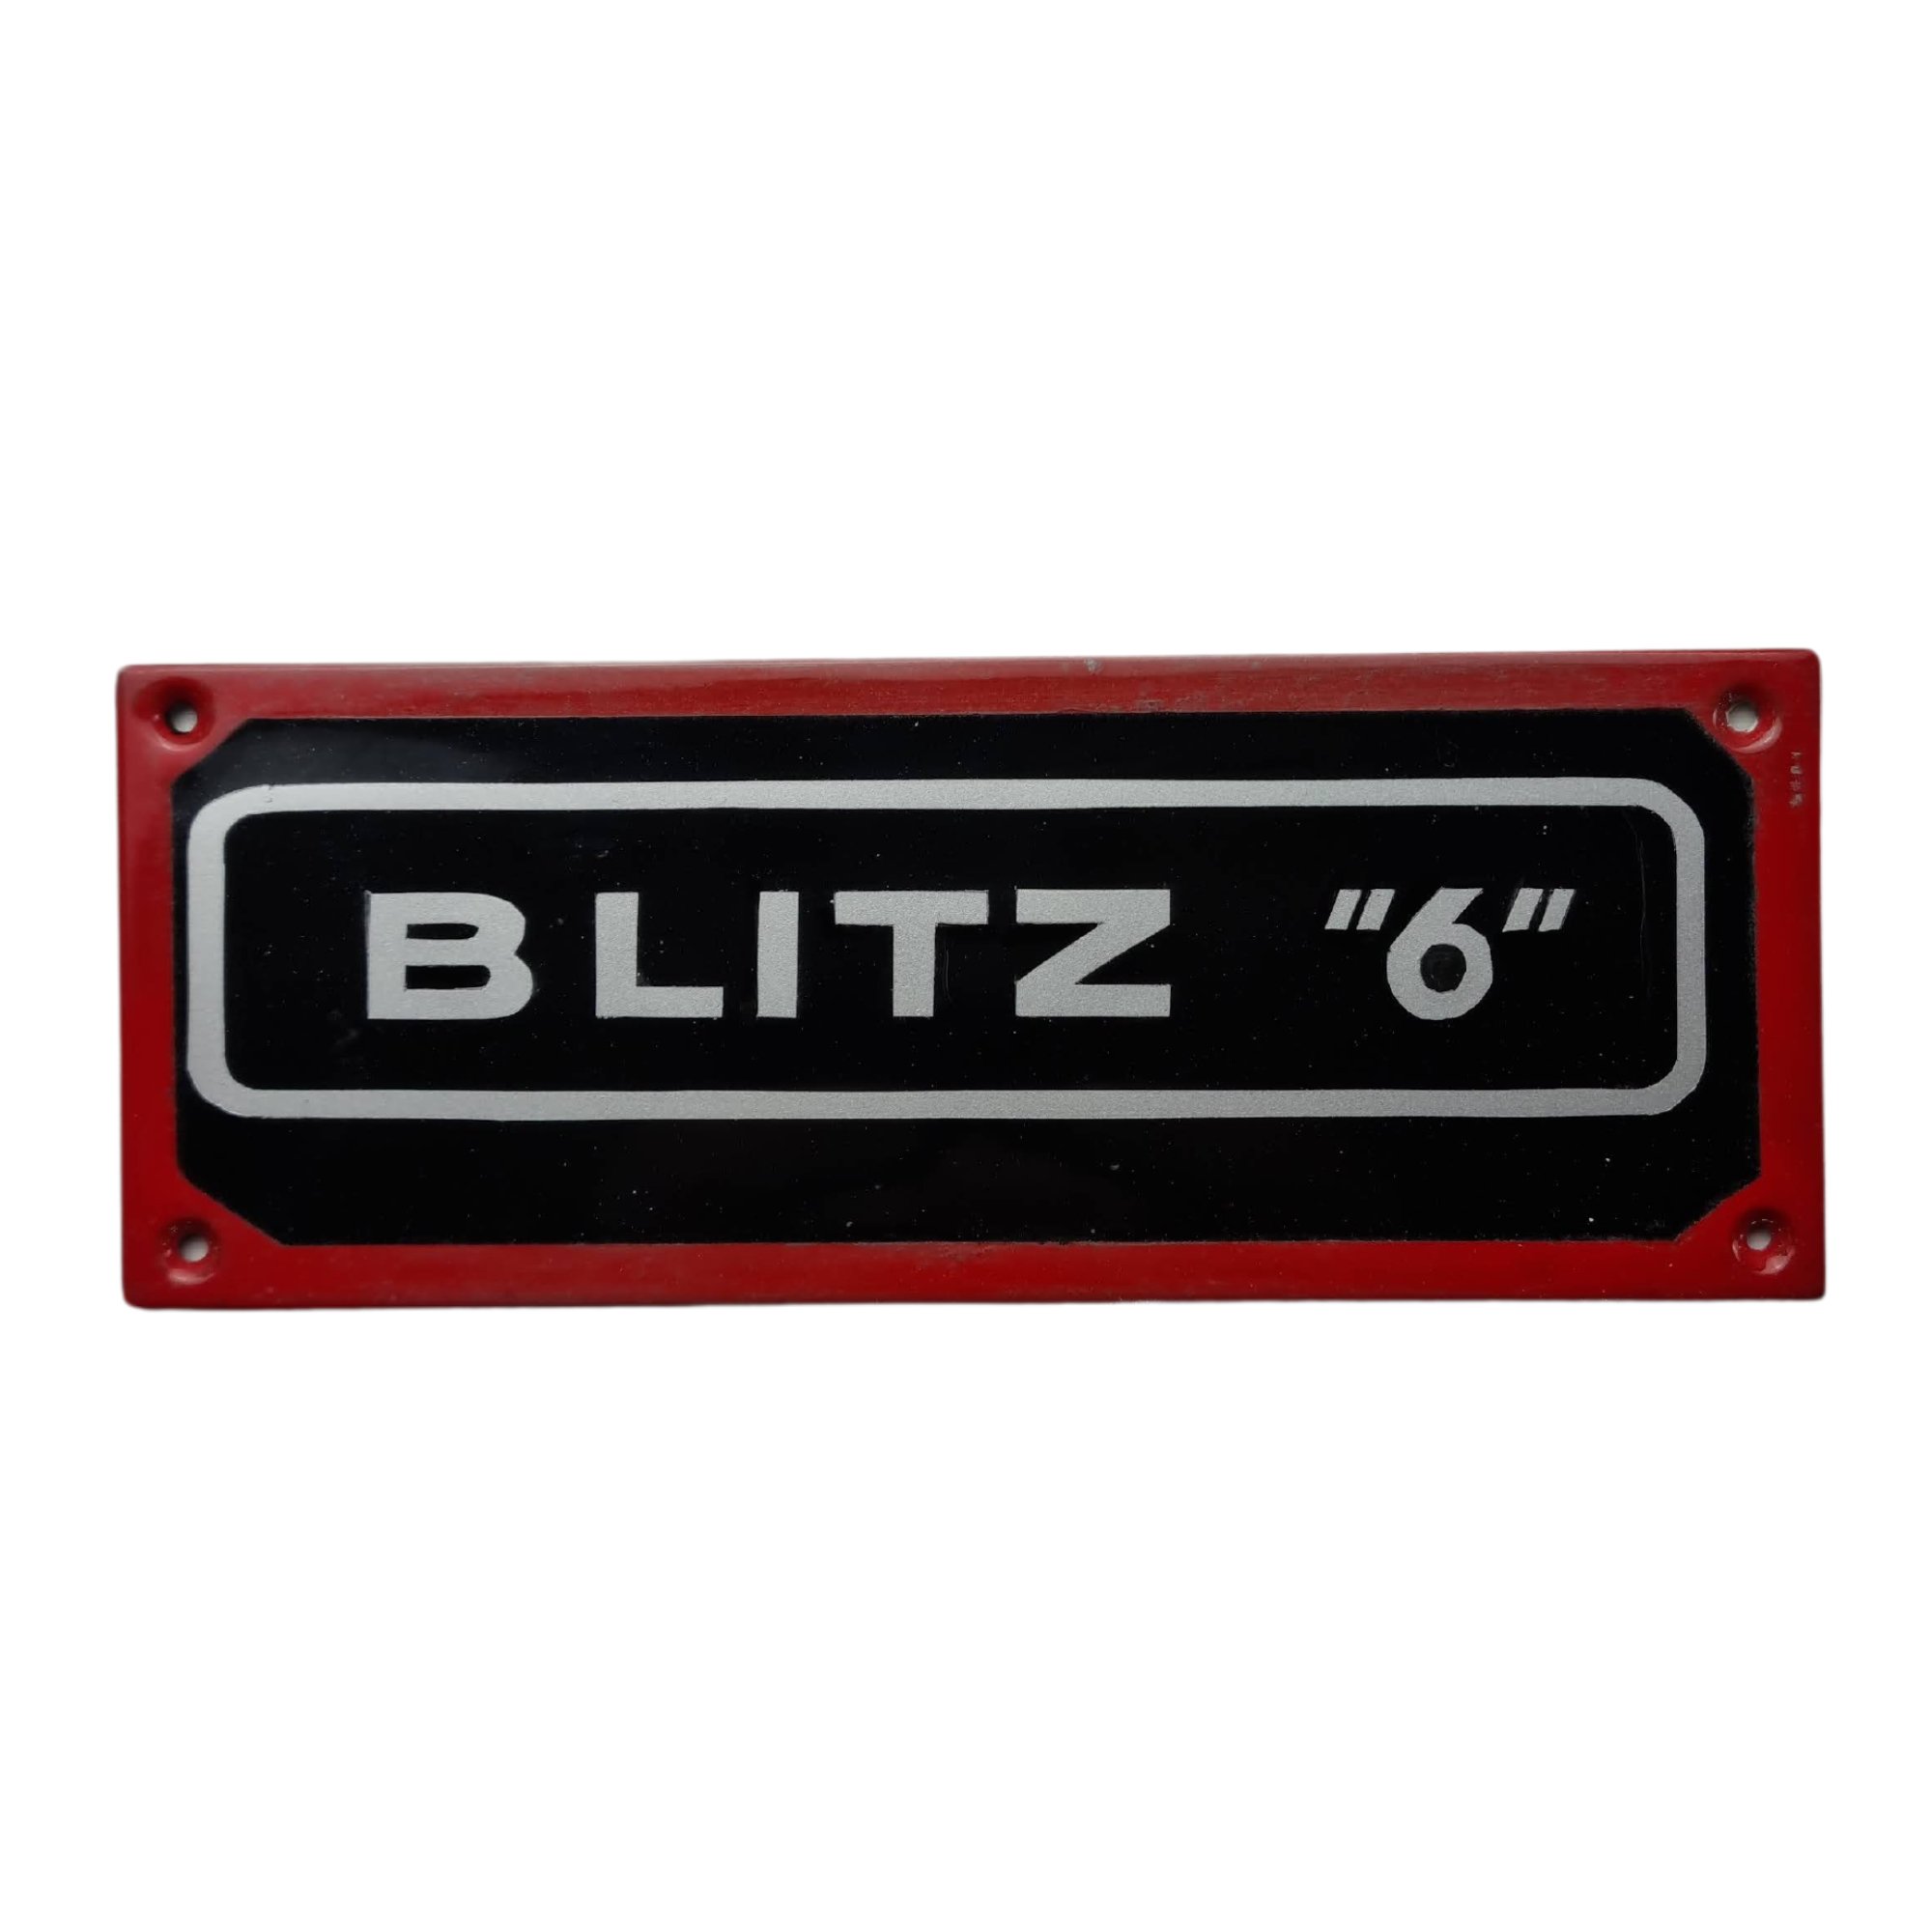 Blitz "6"-Emblem (Deutsches Straßenmuseum e.V. CC BY-NC-SA)